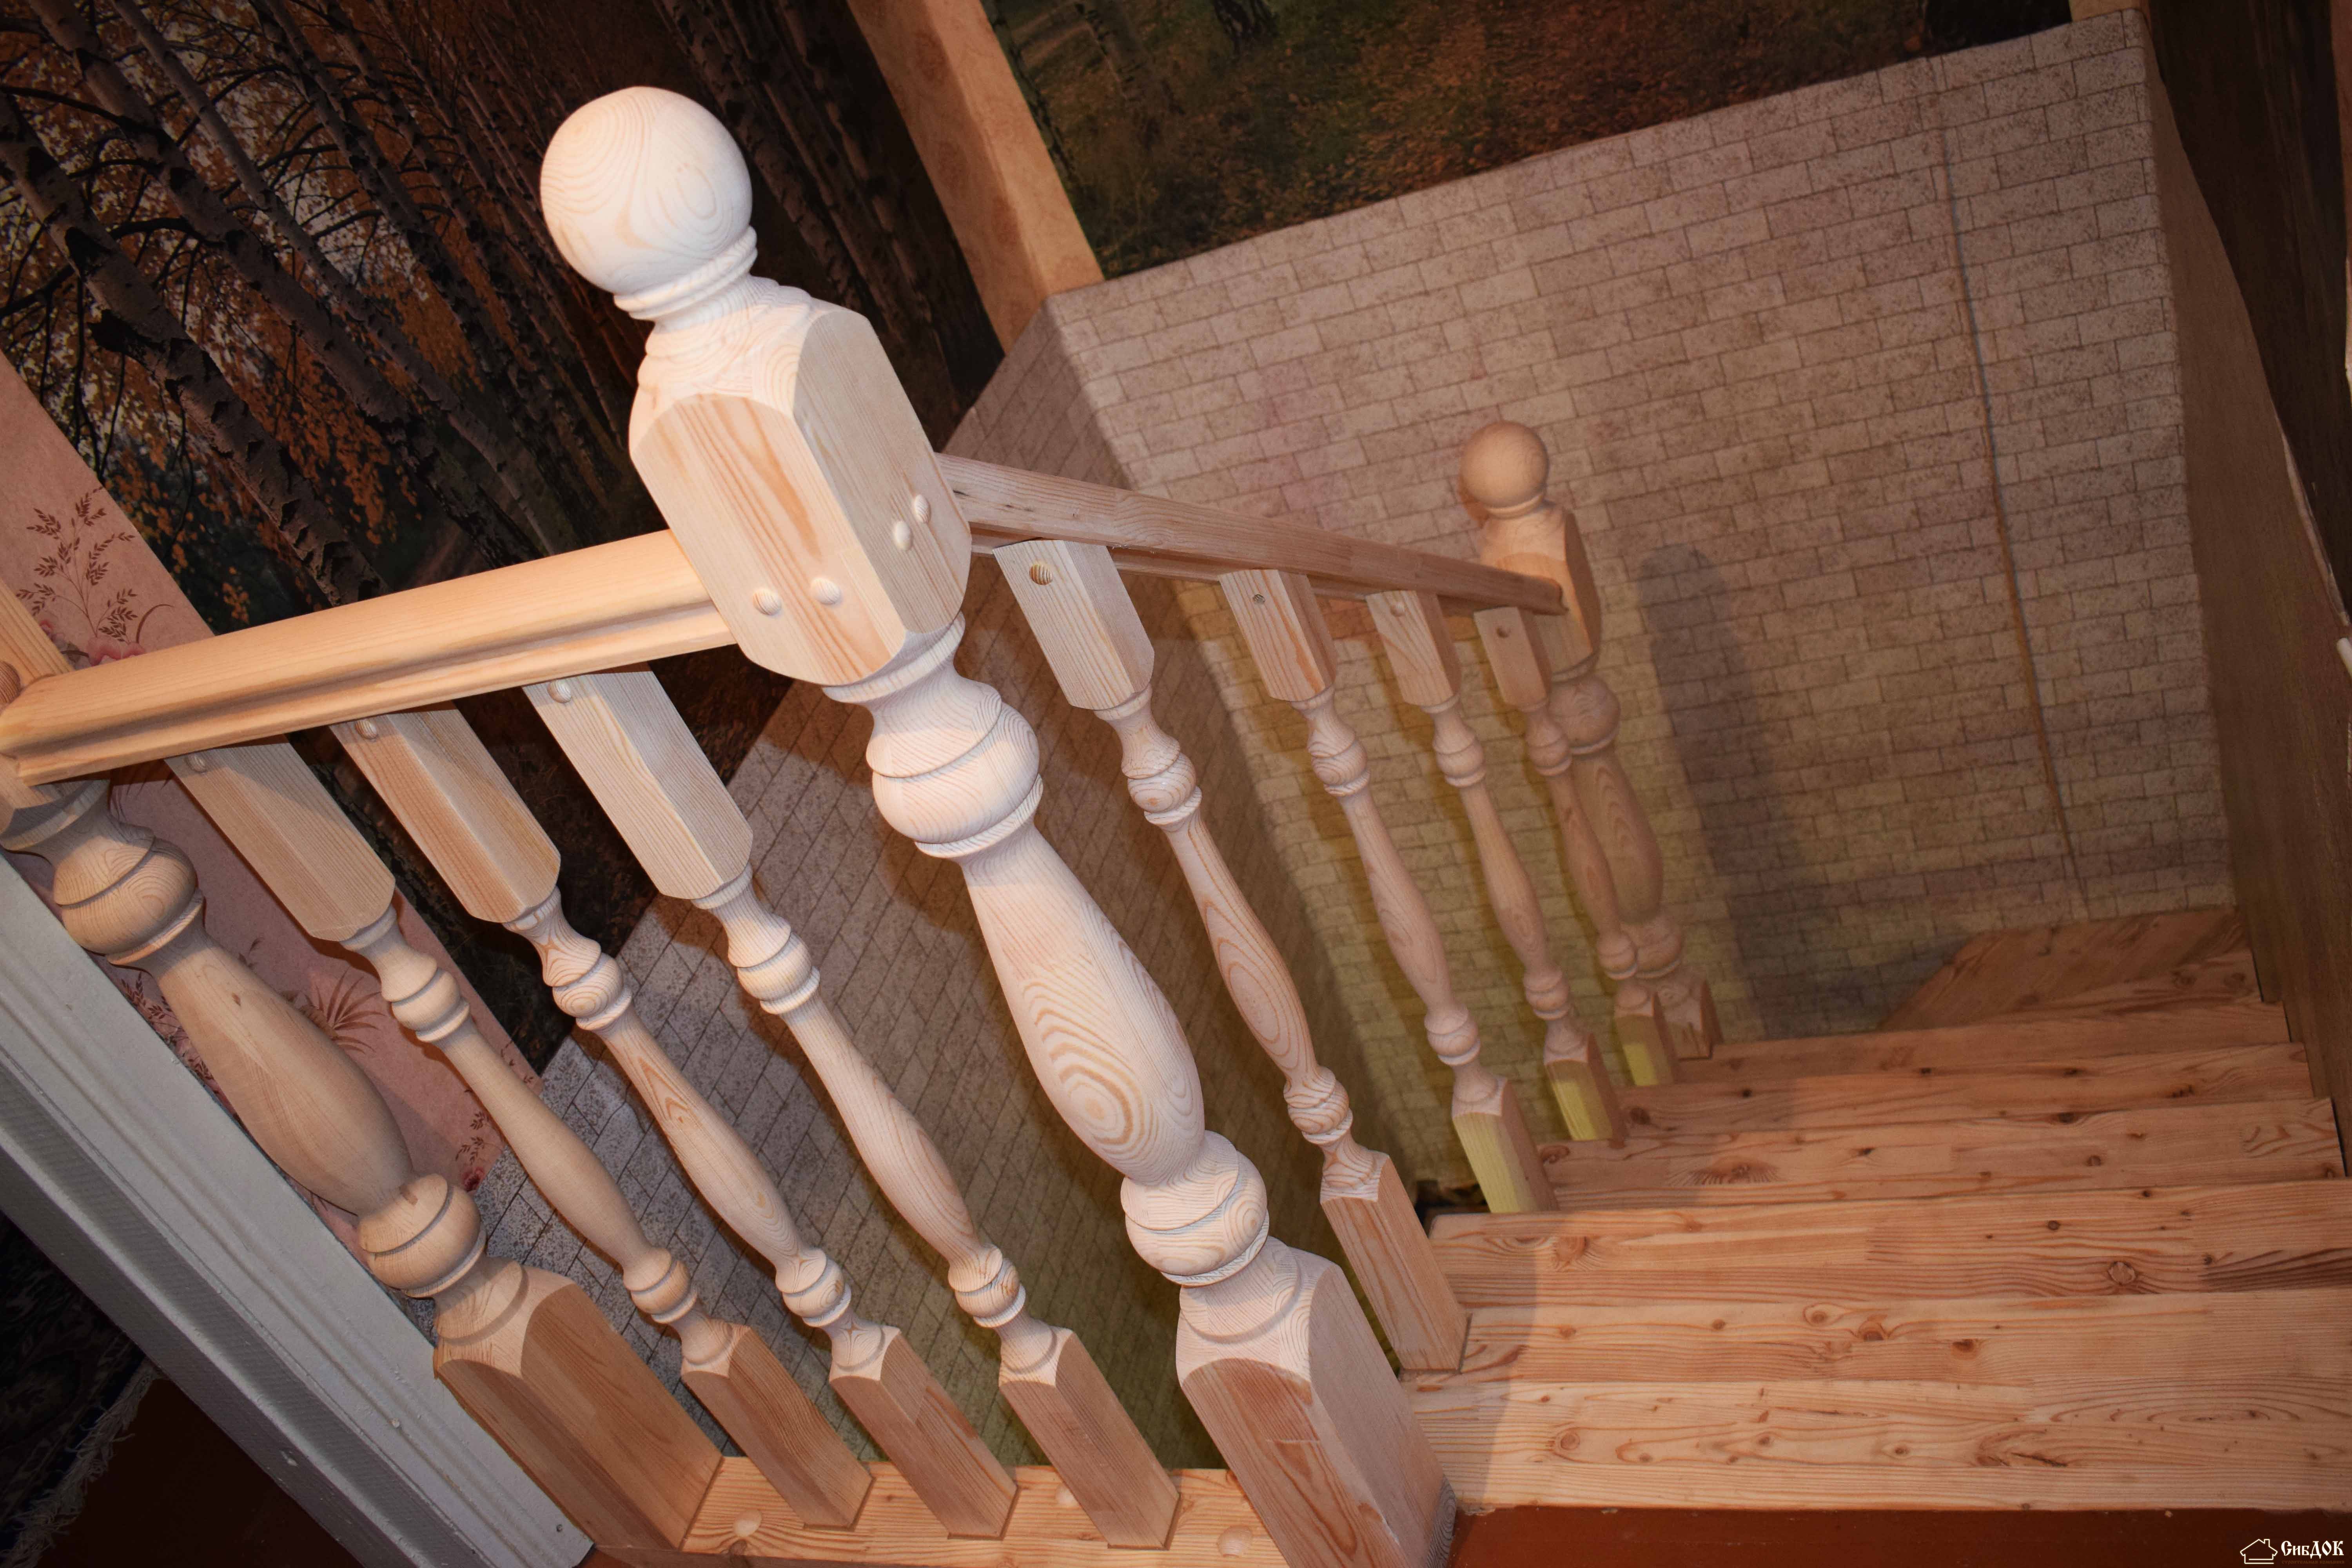 Установка балясин на деревянную лестницу своими руками - пошагово